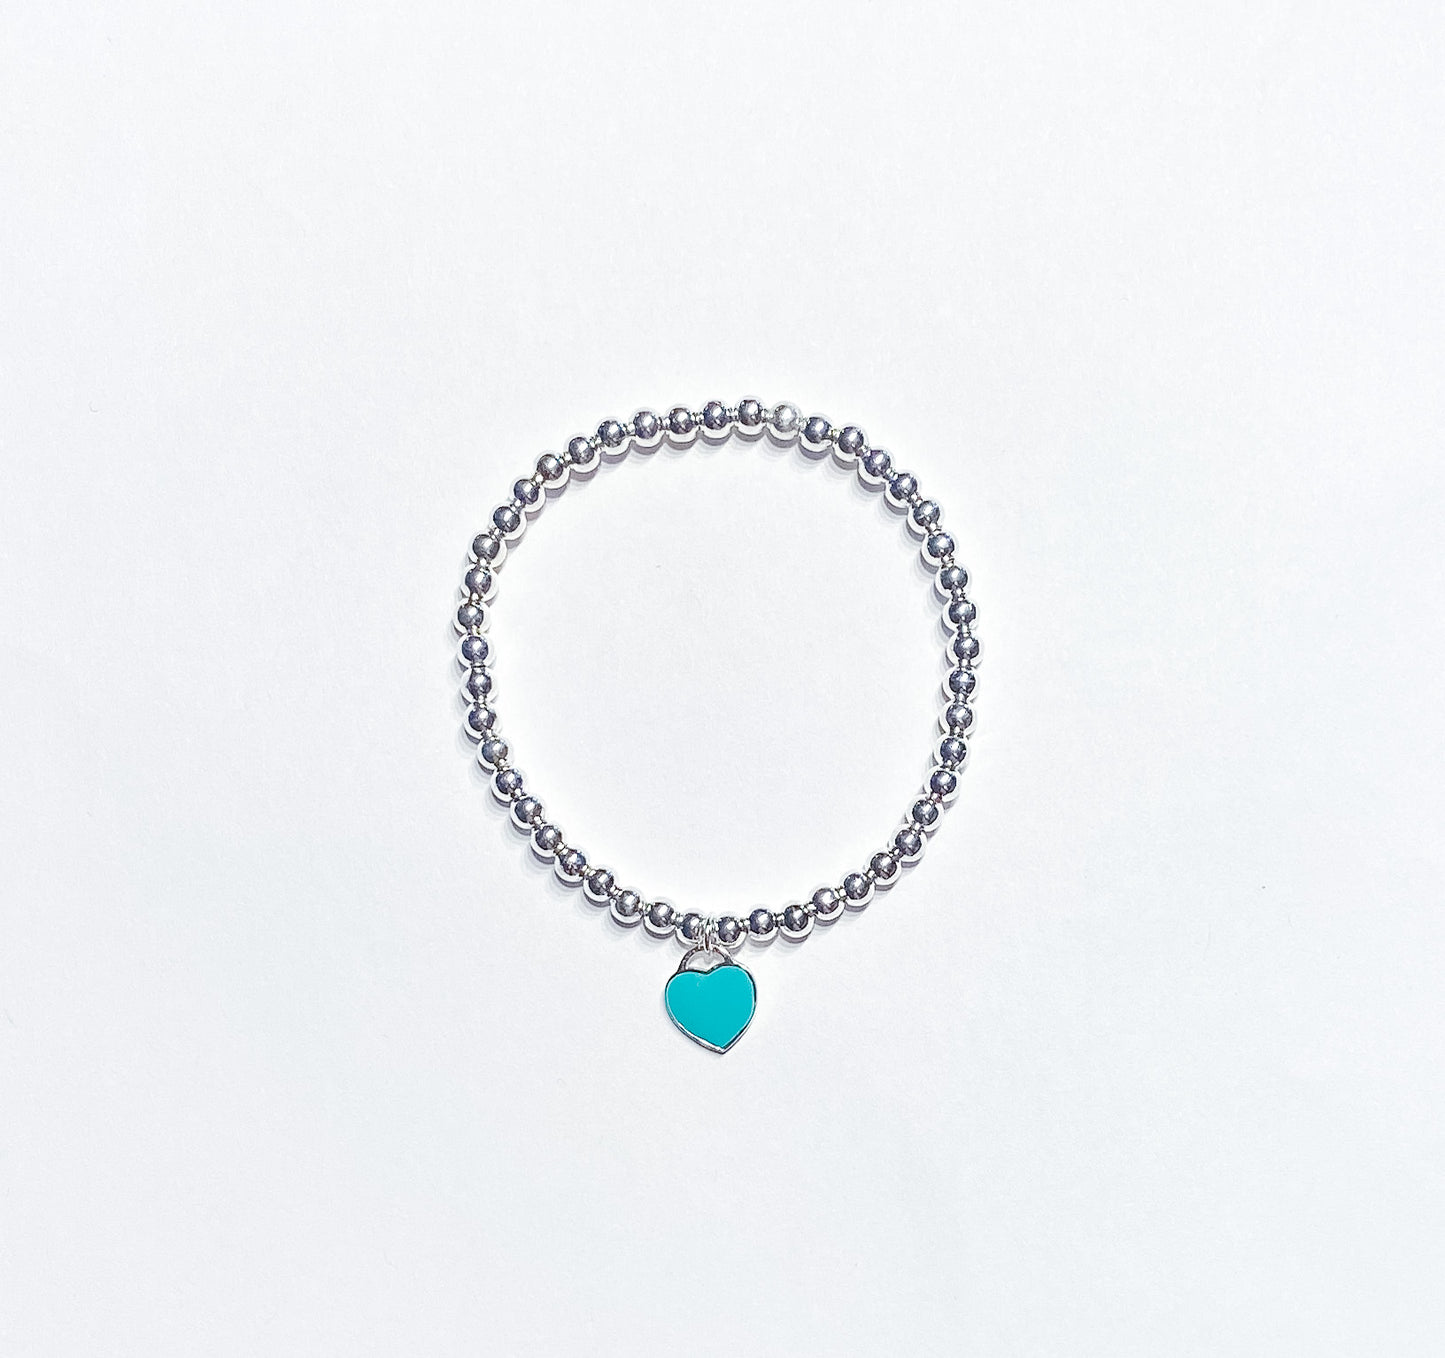 Tiffany’s Inspired Bracelet